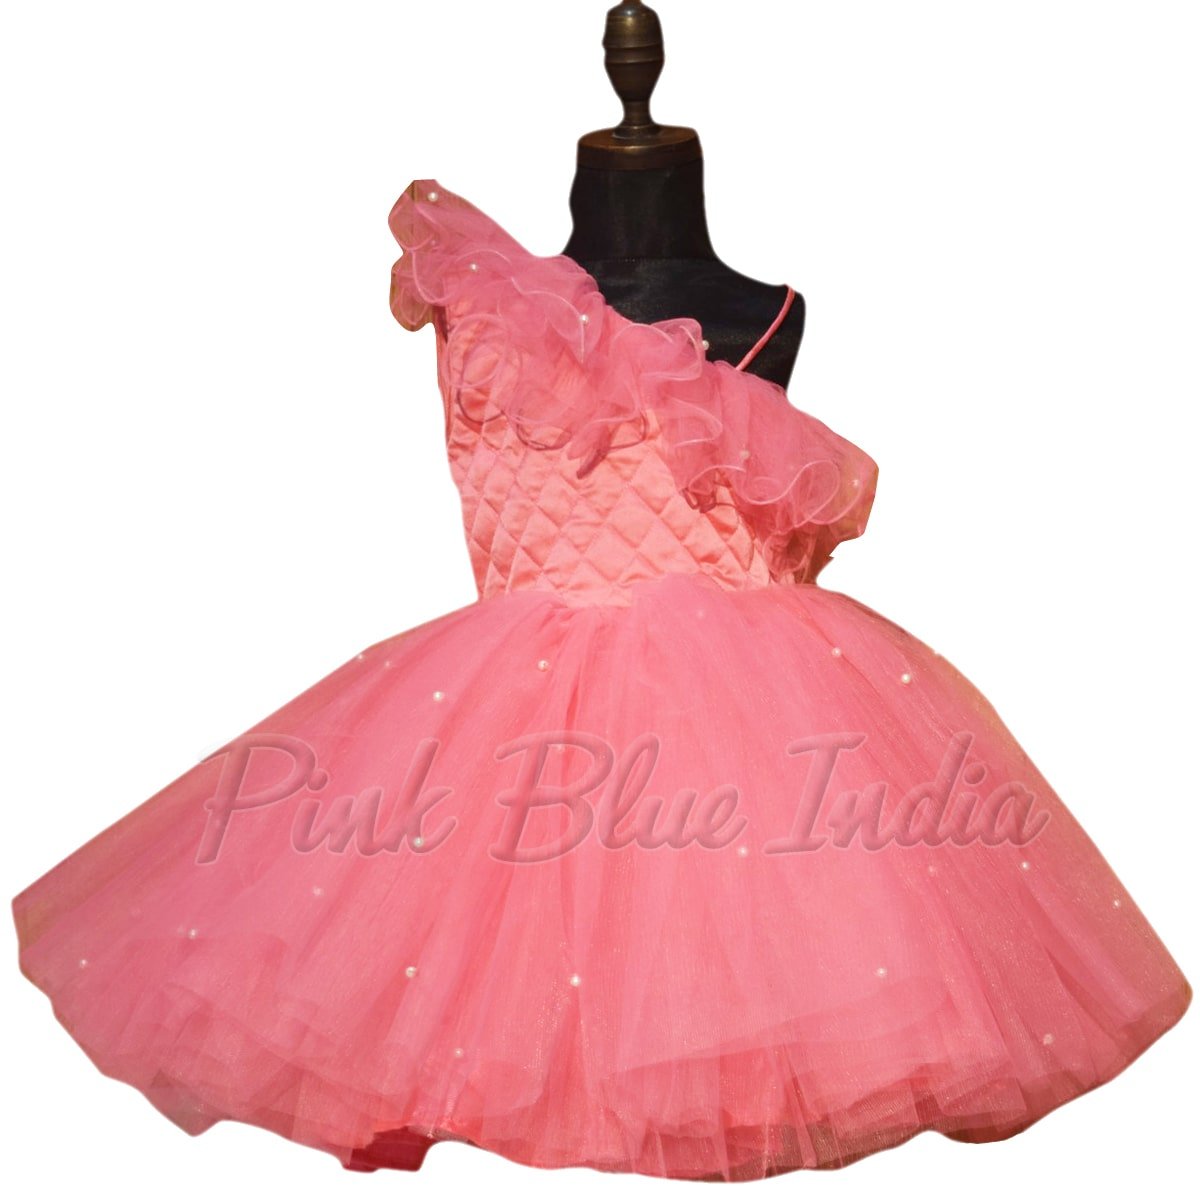 Girls Birthday Gown, Kids Pink Gown Party Wear Dress